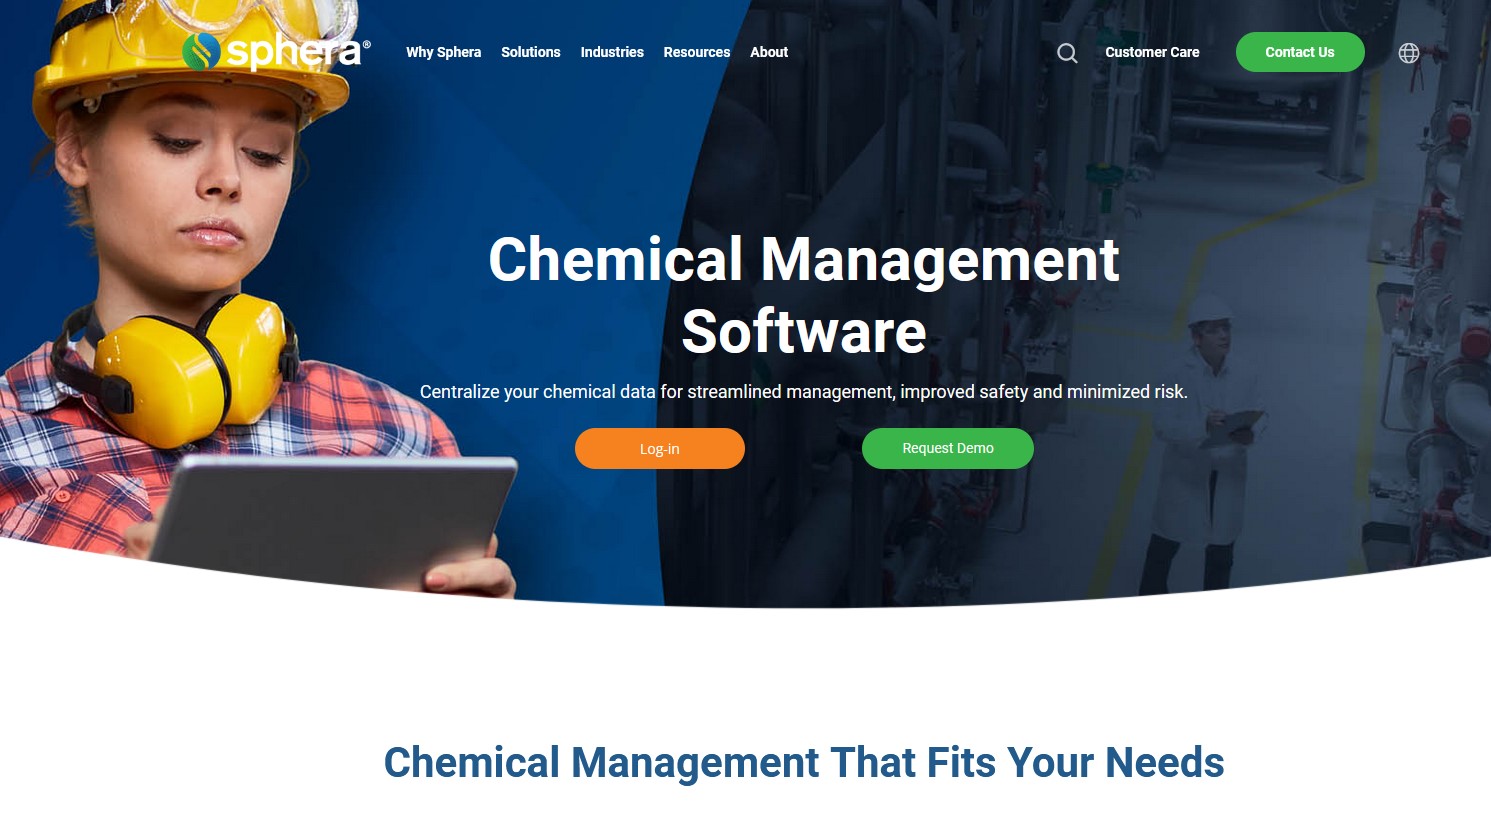 Sphera Chemical Management Software